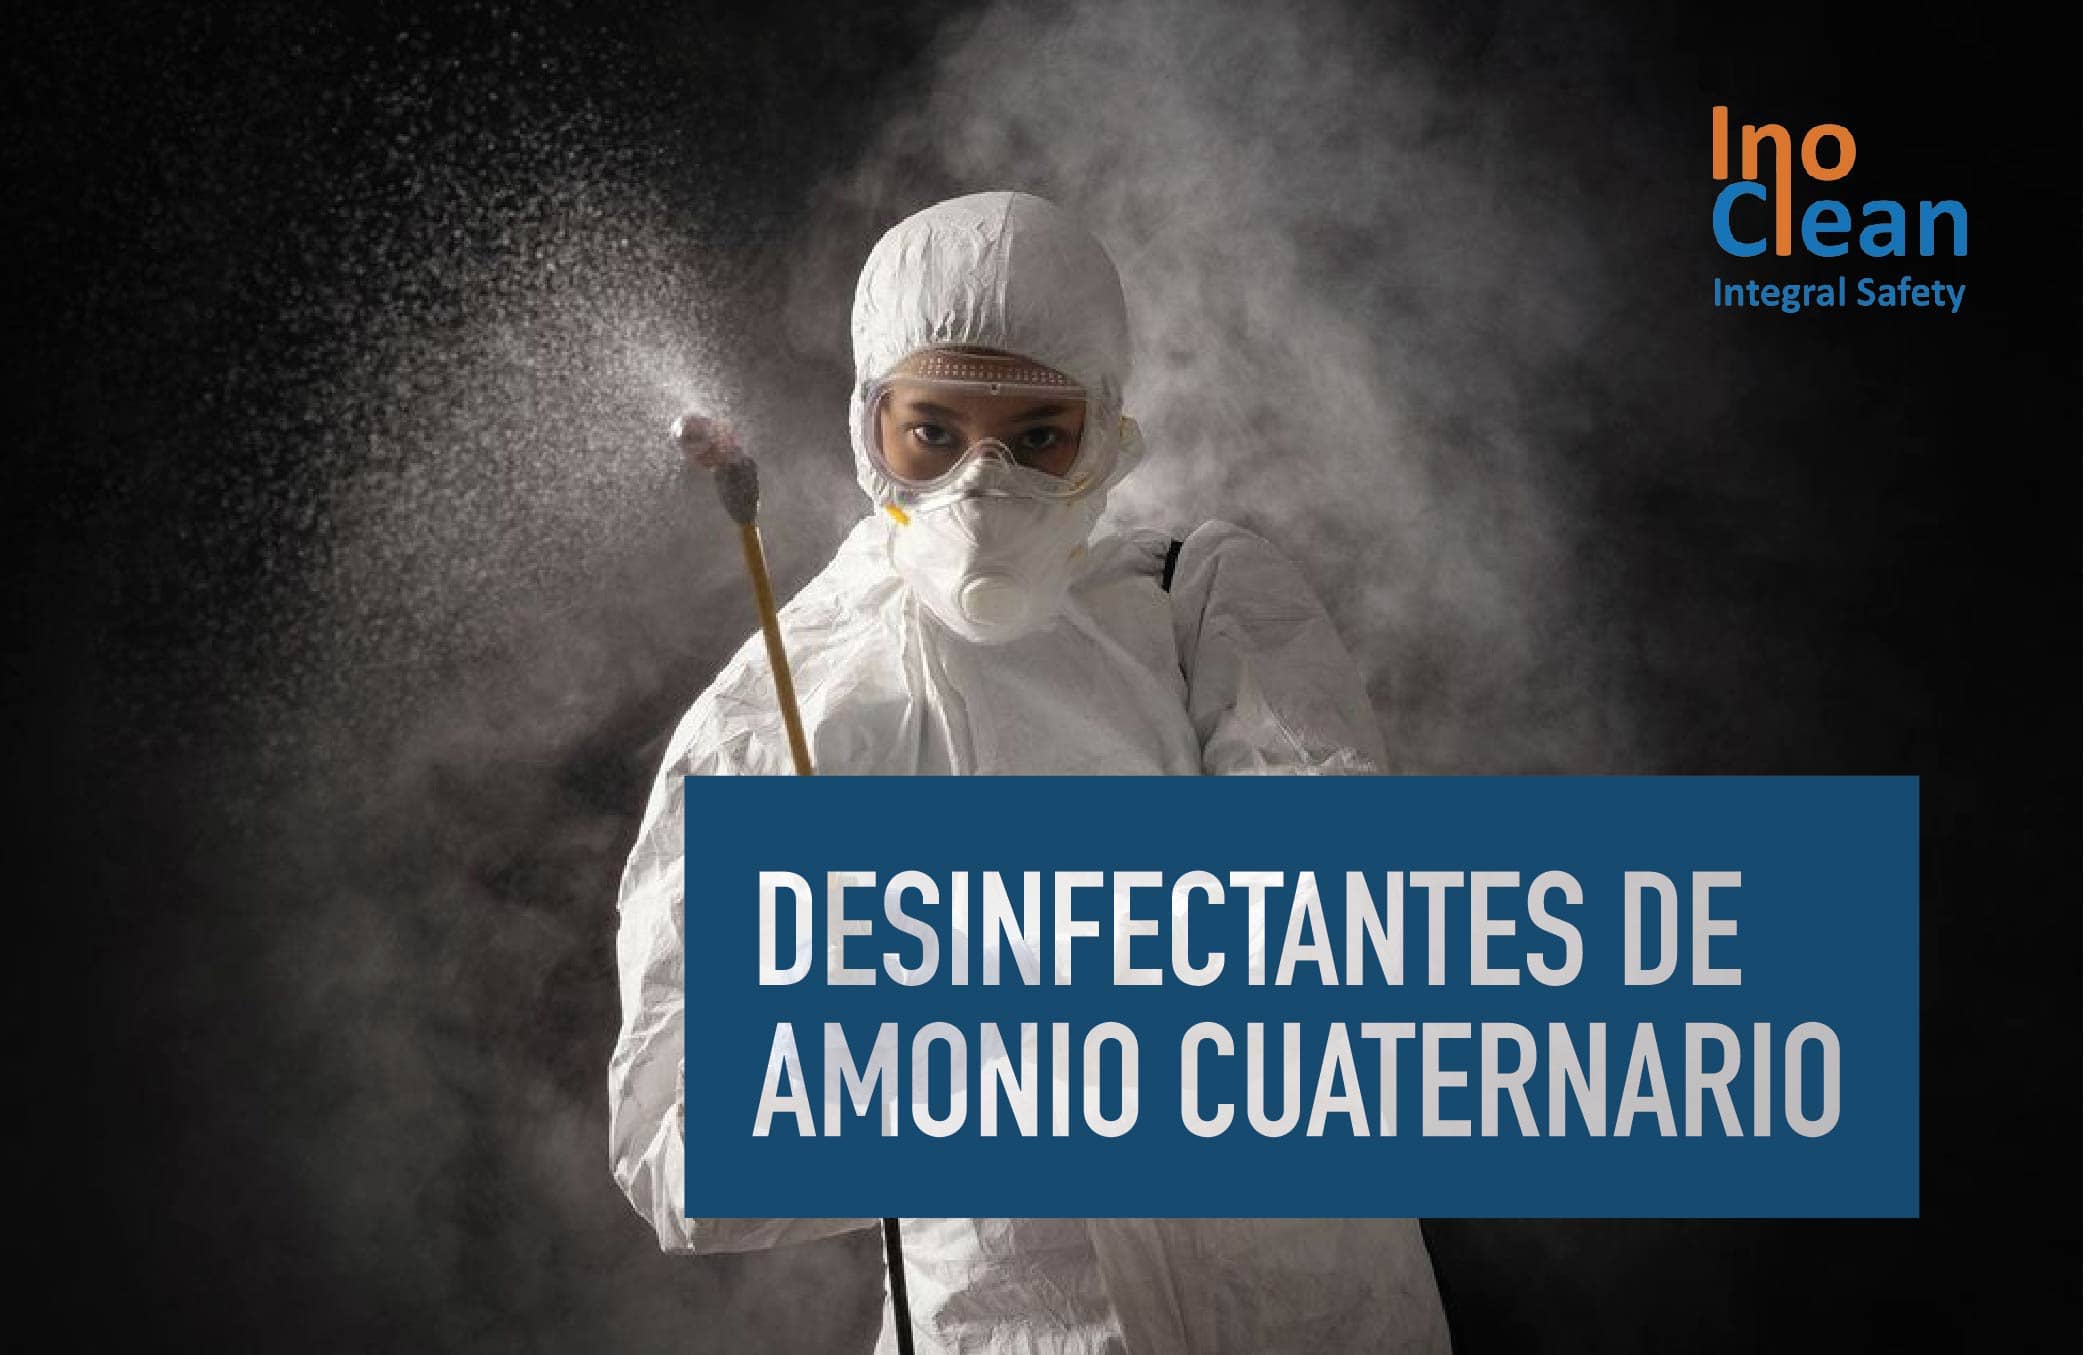 Desinfectantes de amonio cuaternario